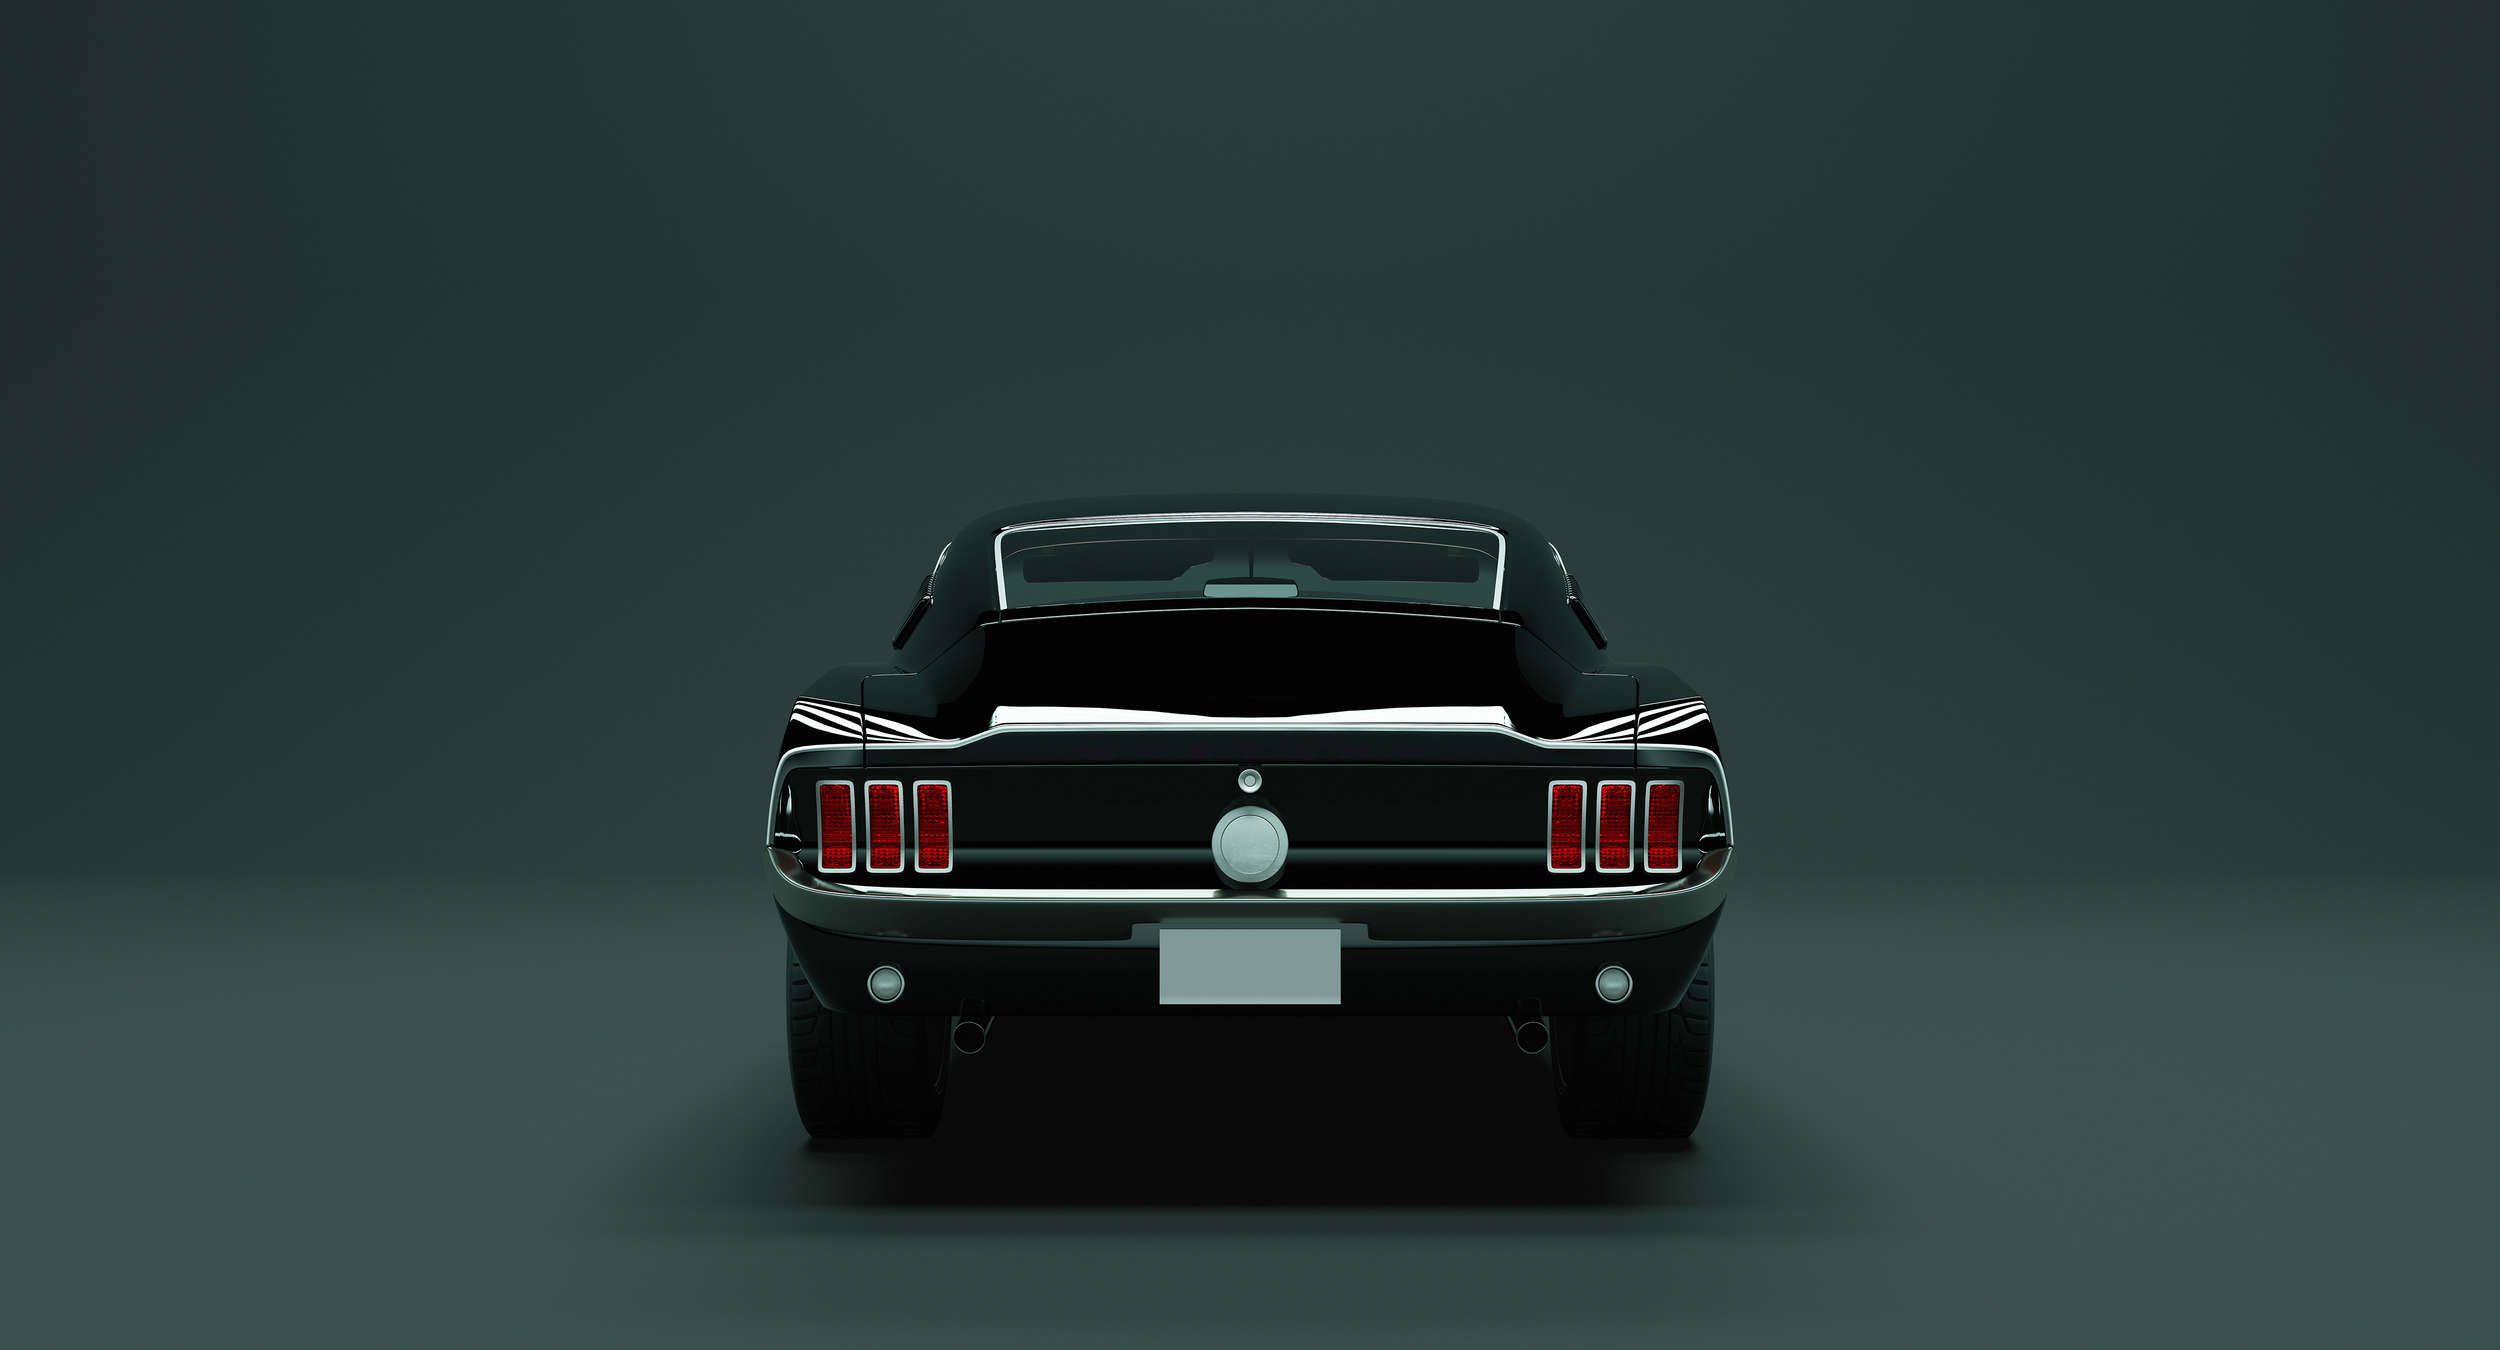             Mustang 3 - American Muscle Car Onderlaag behang - Blauw, Zwart | Premium Smooth Vliesbehang
        